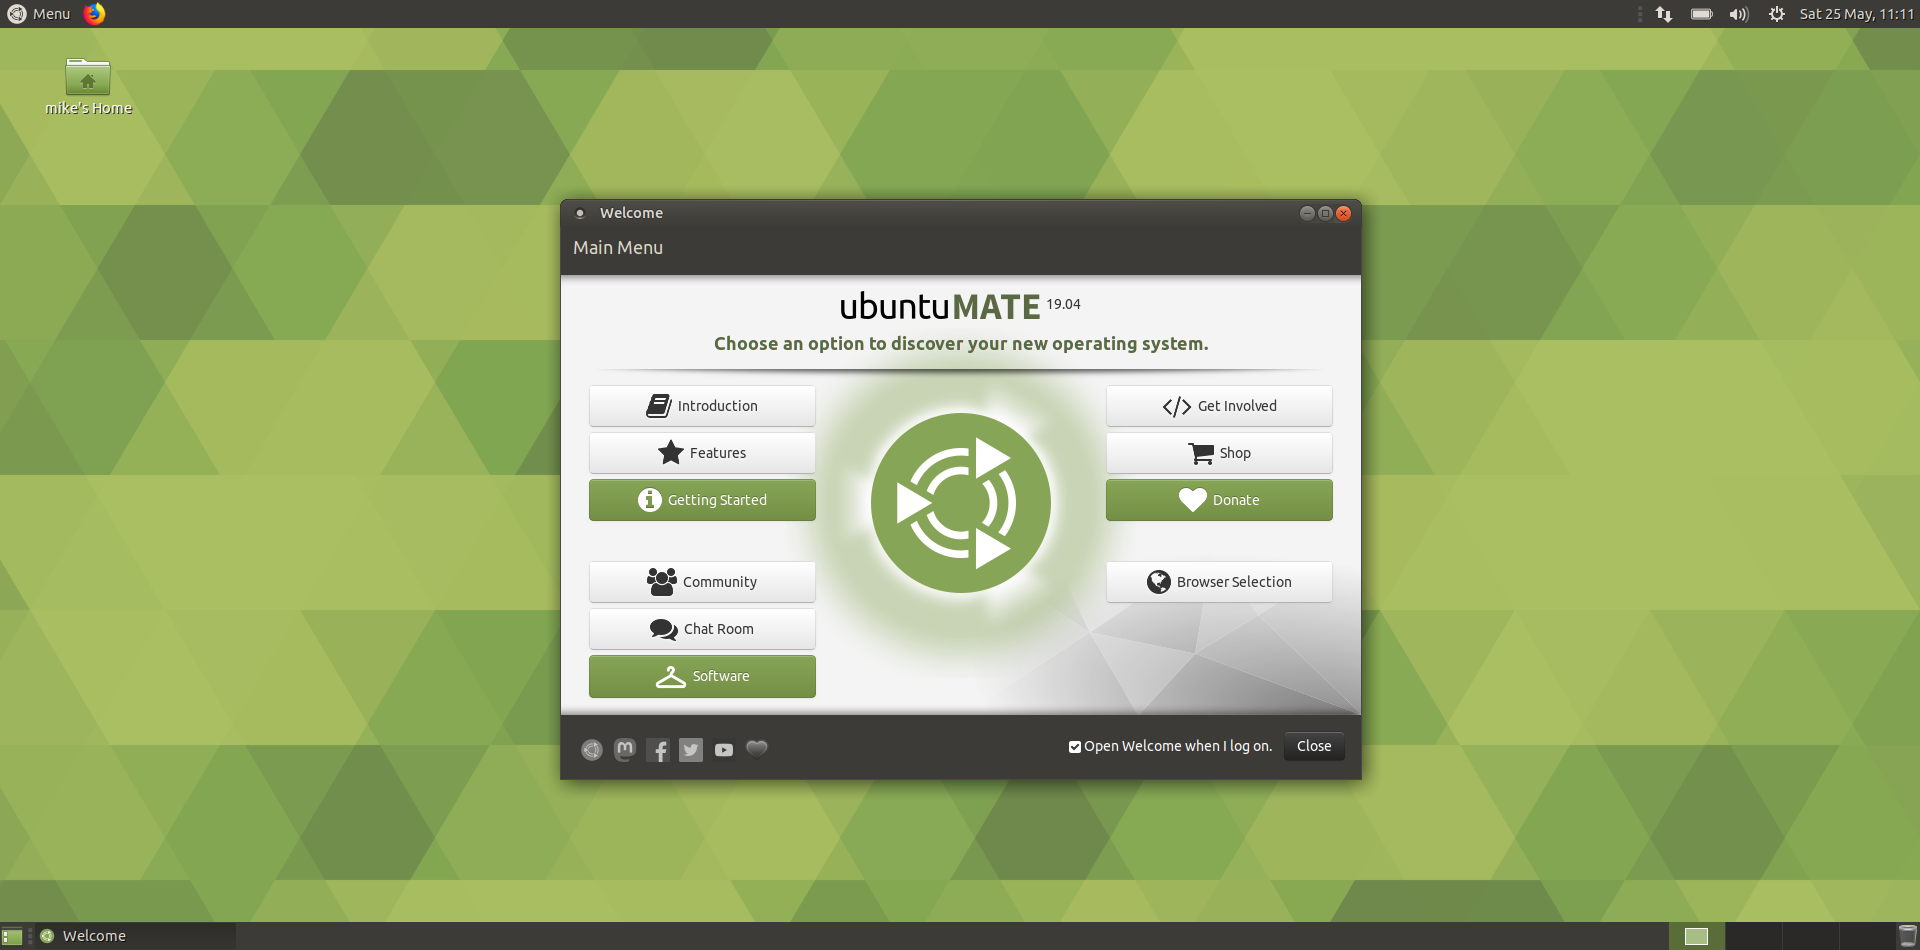 ubuntu mate - the welcome screen